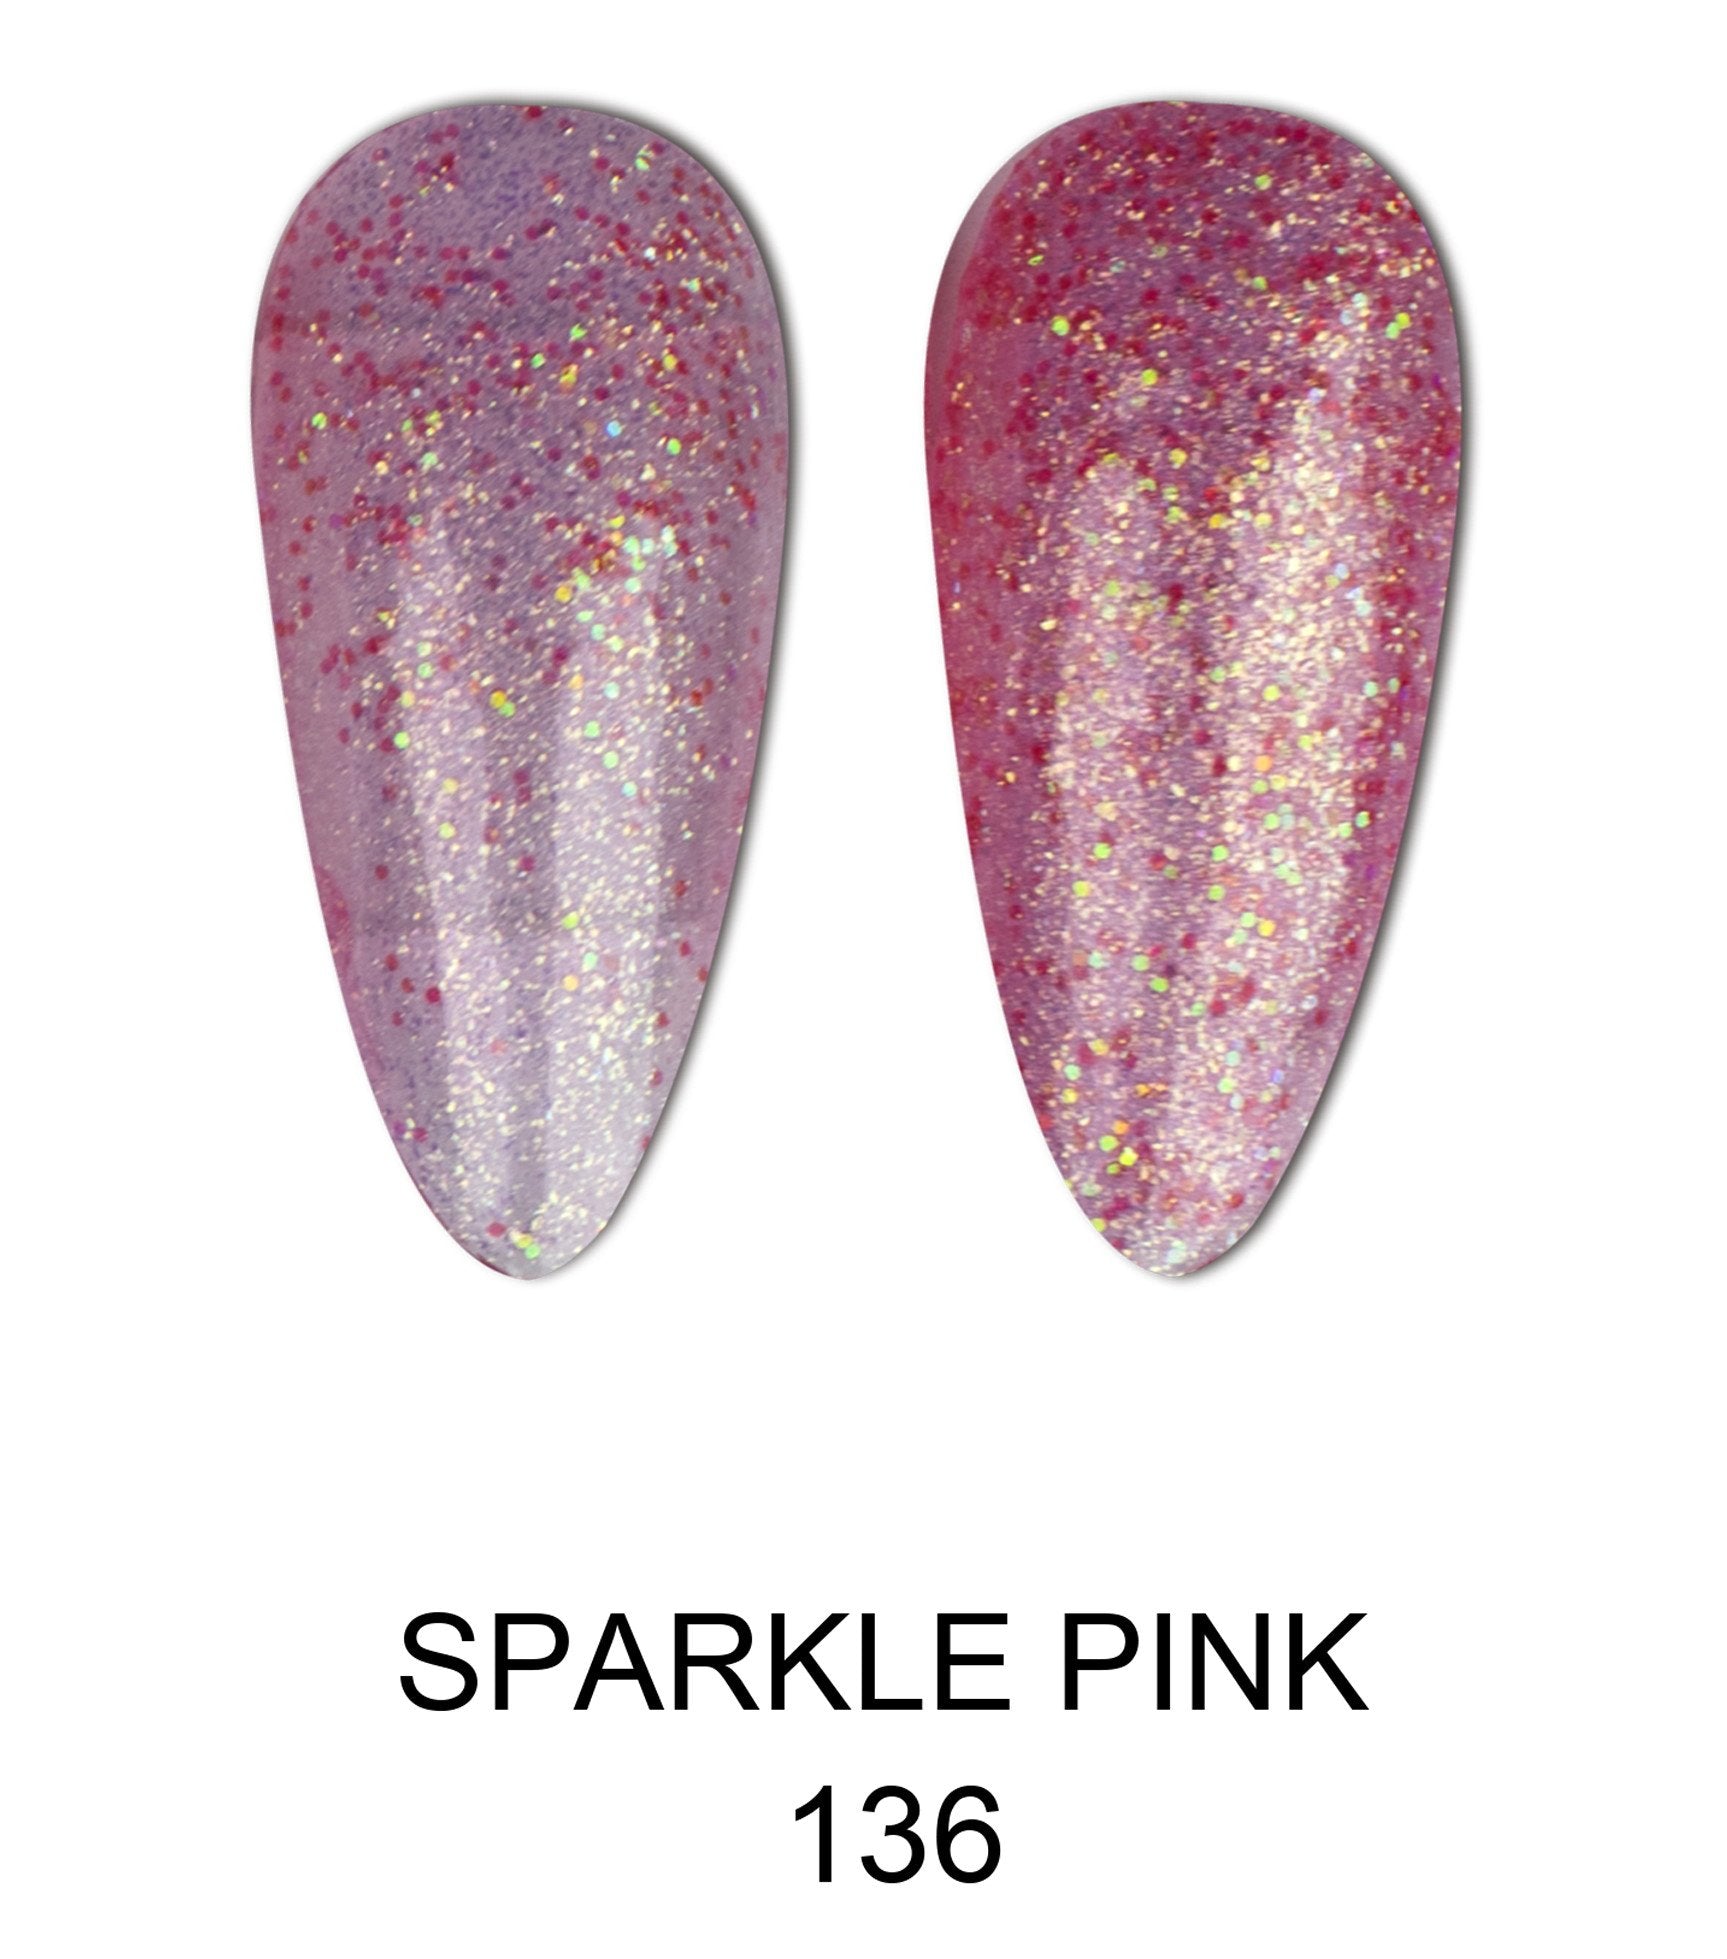 Claw Culture 136 Summer Sparkle Pink Limited Edition Gel Polish